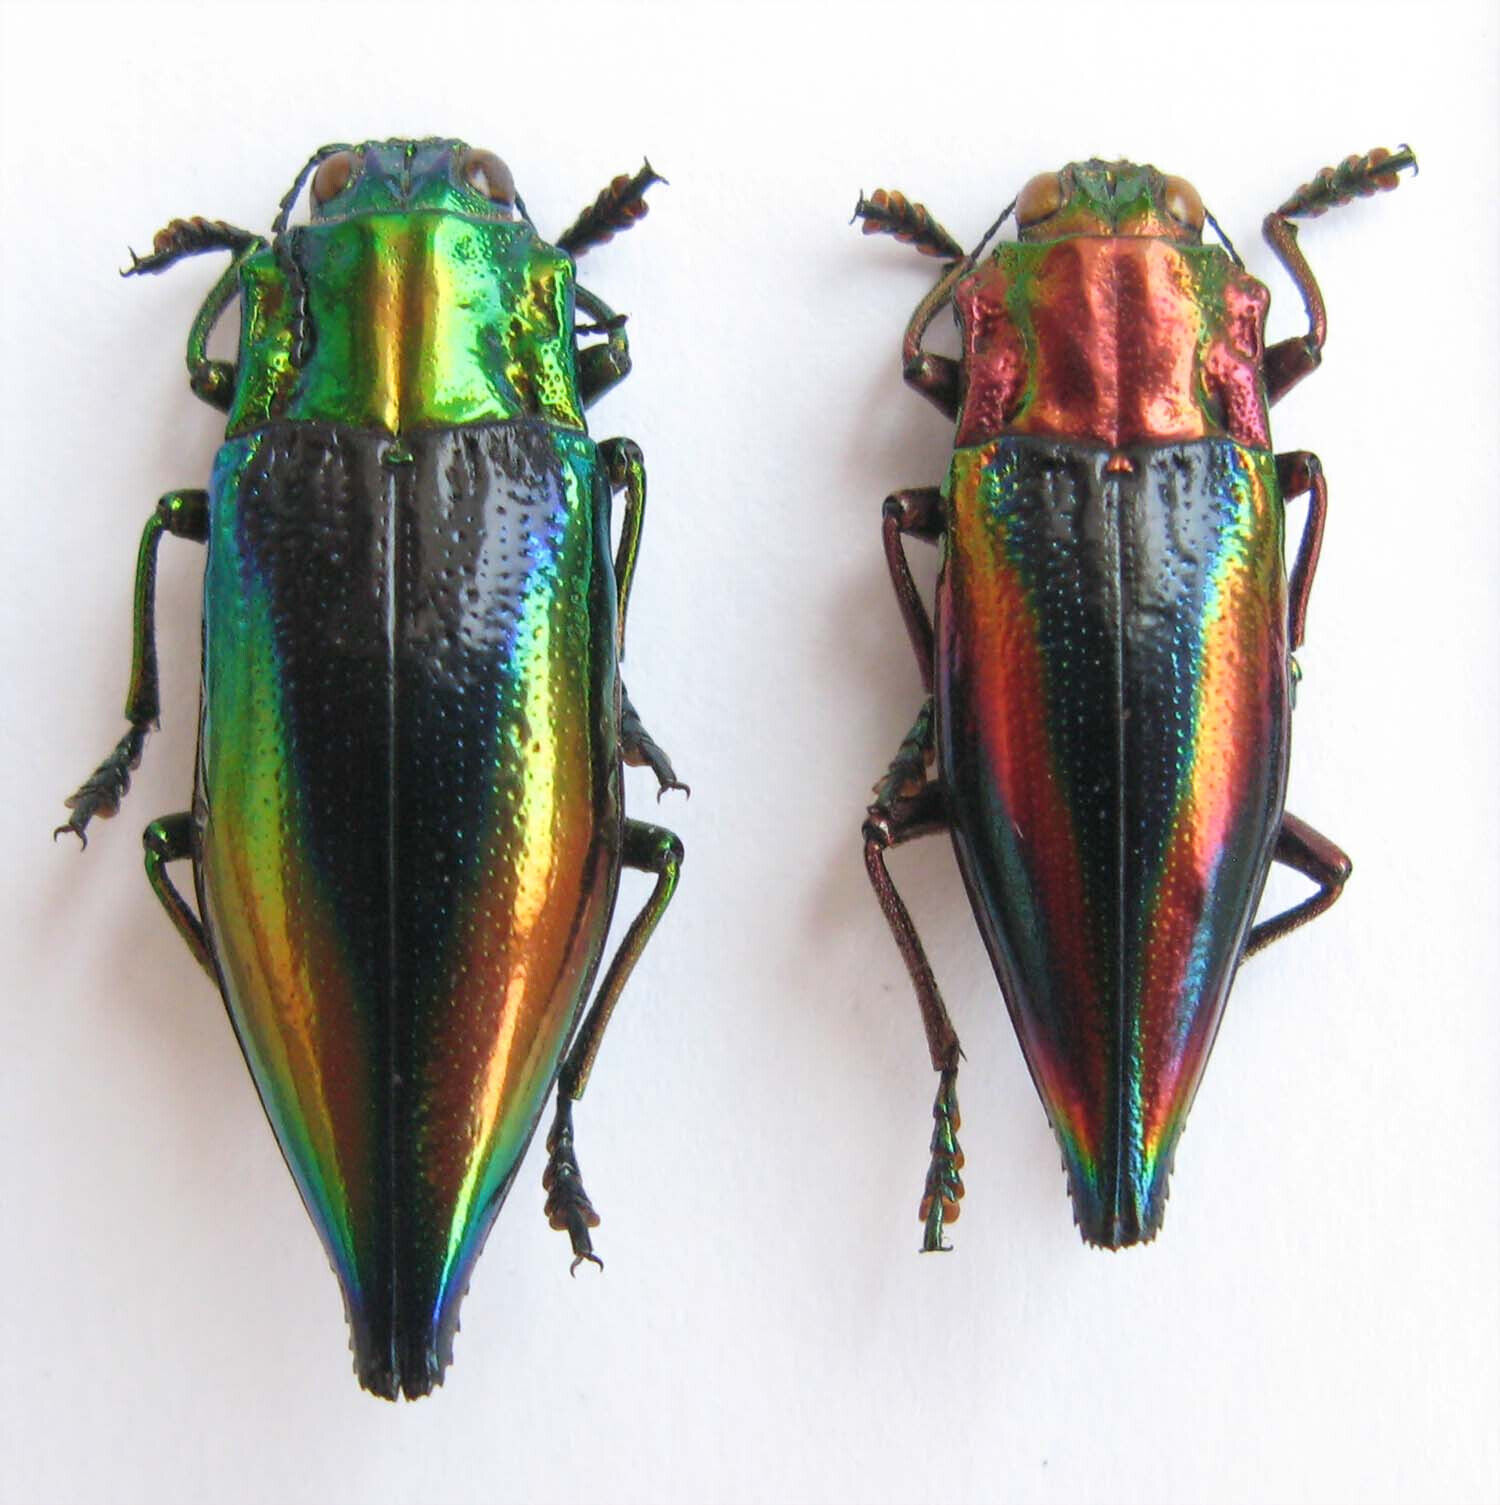 Cyphogastra calepyga and javanica (Buprestidae)